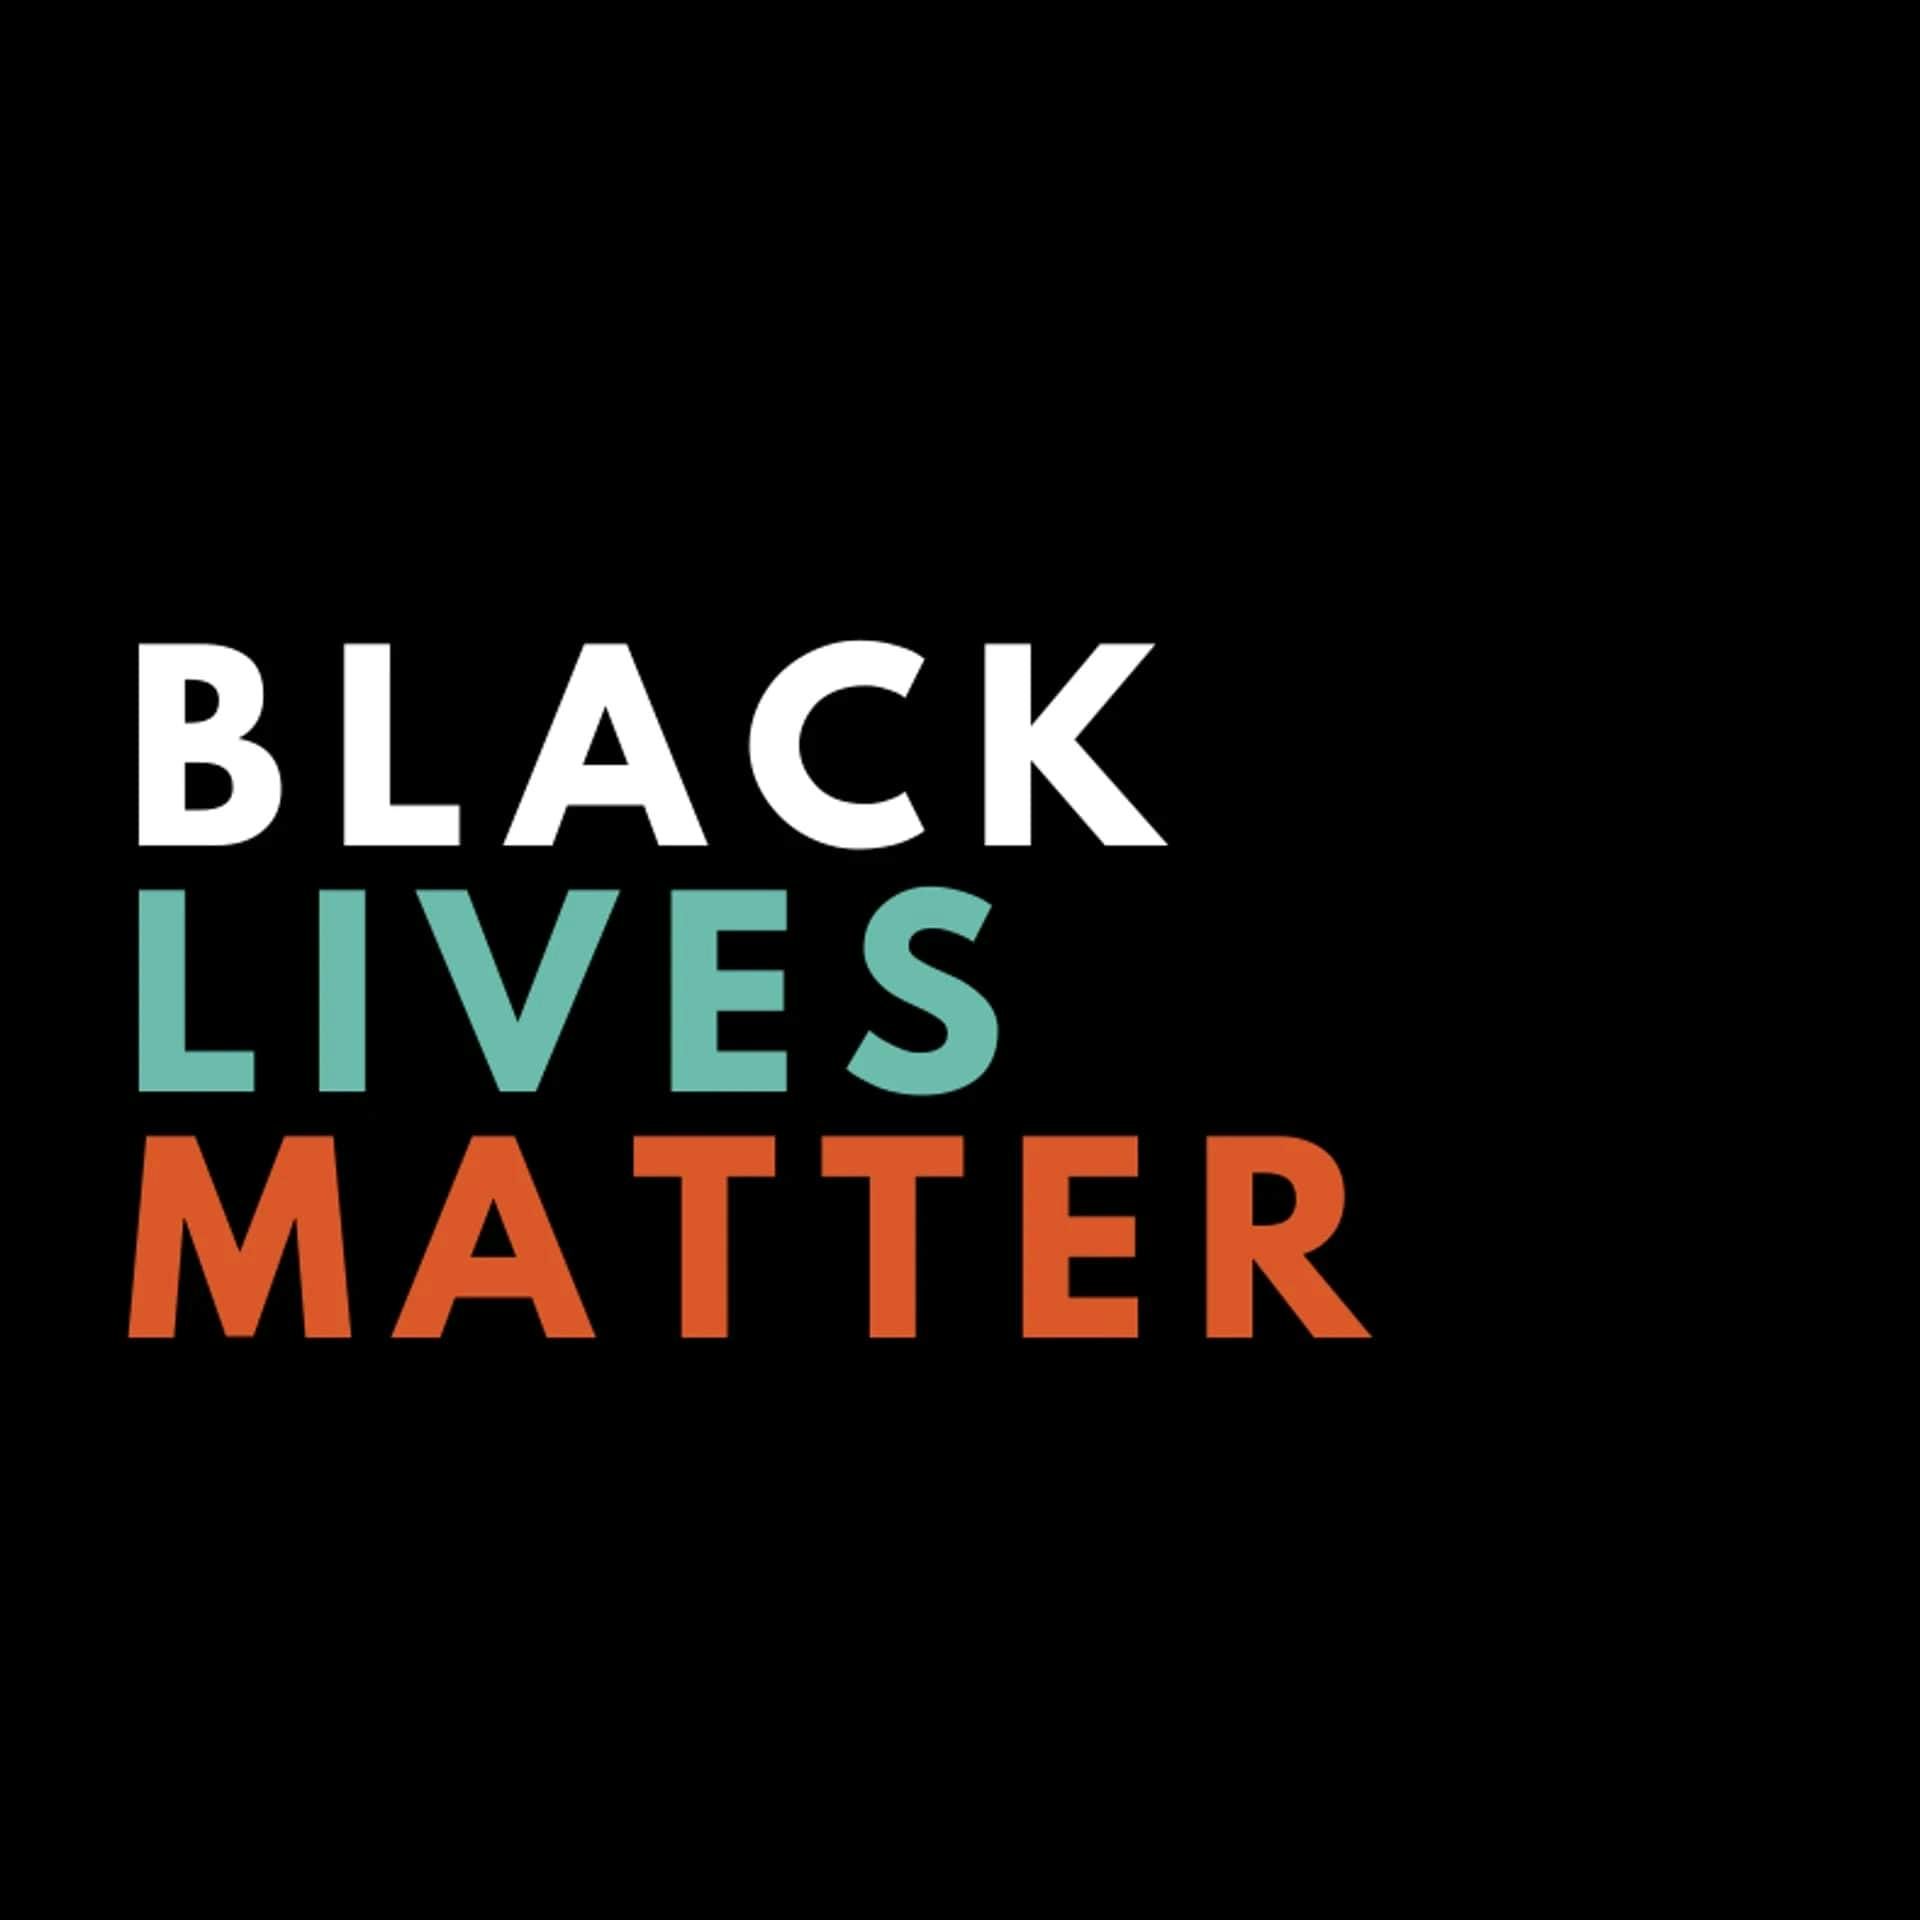 The words 'Black Lives Matter' on a black background